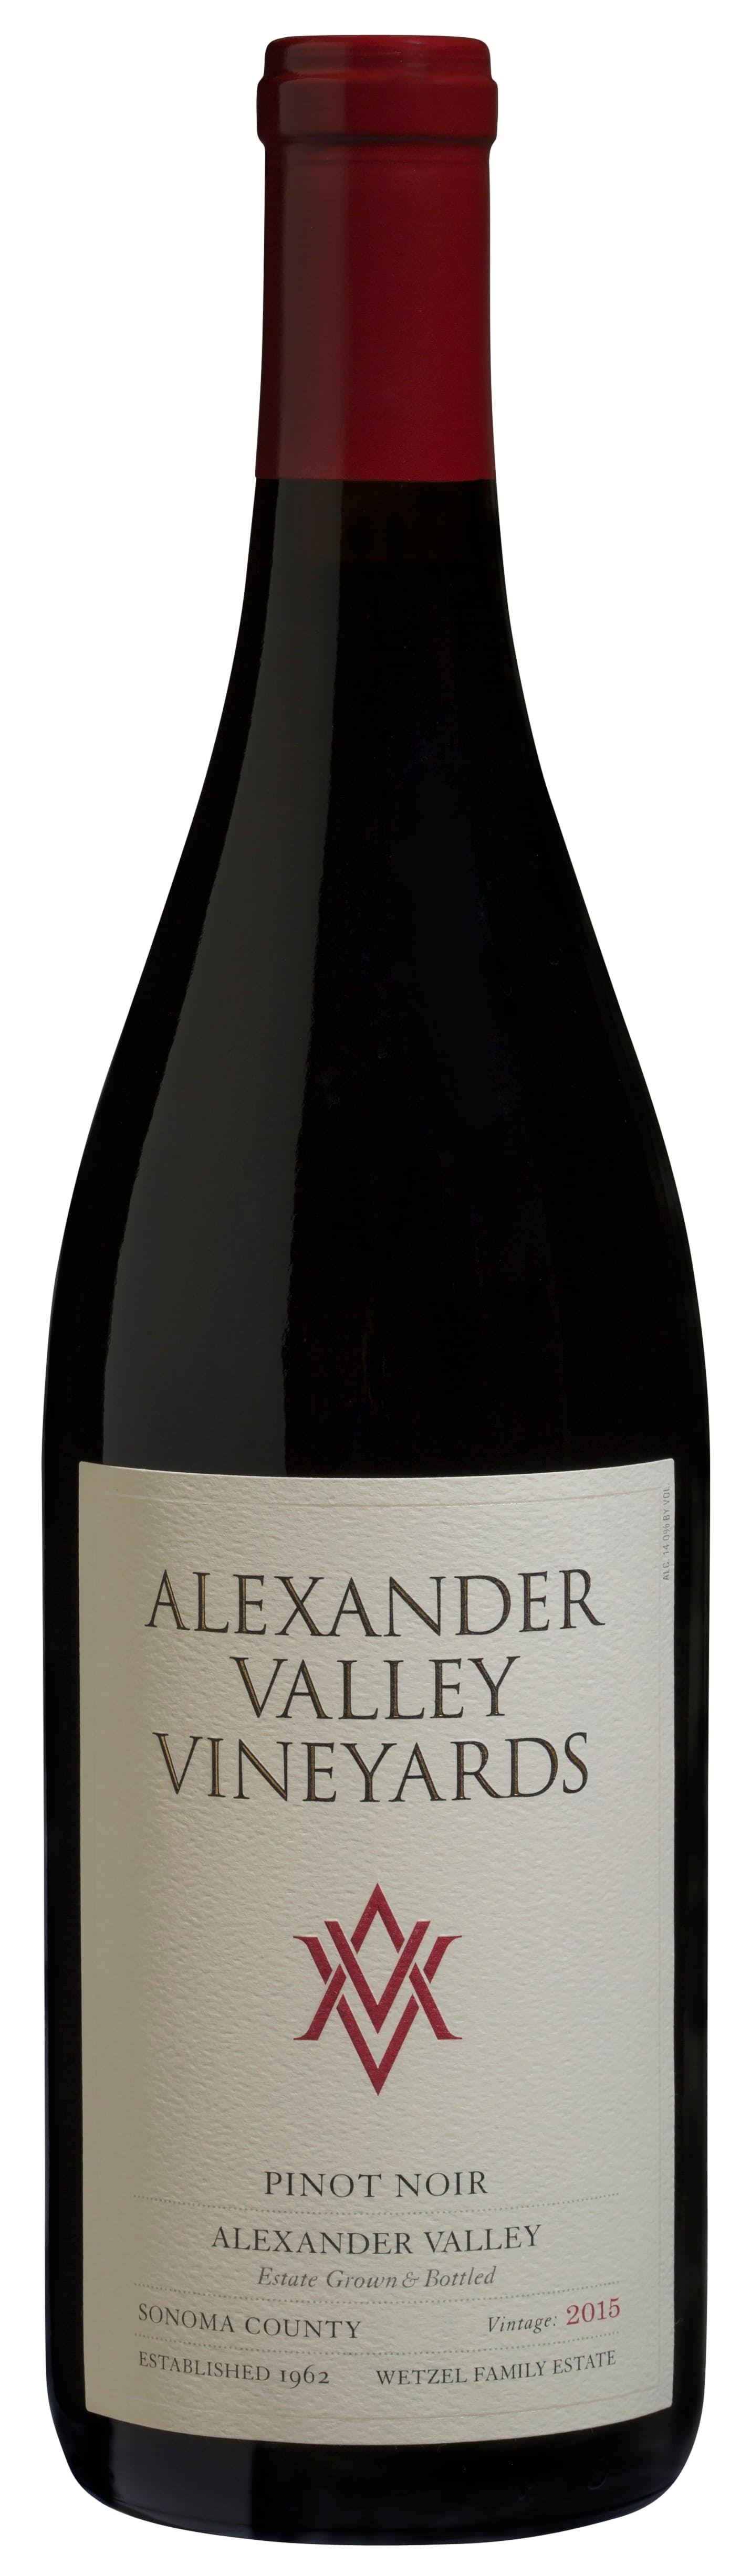 Alexander Valley Vineyards Pinot Noir, Alexander Valley, Sonoma County, 2008 - 750 ml